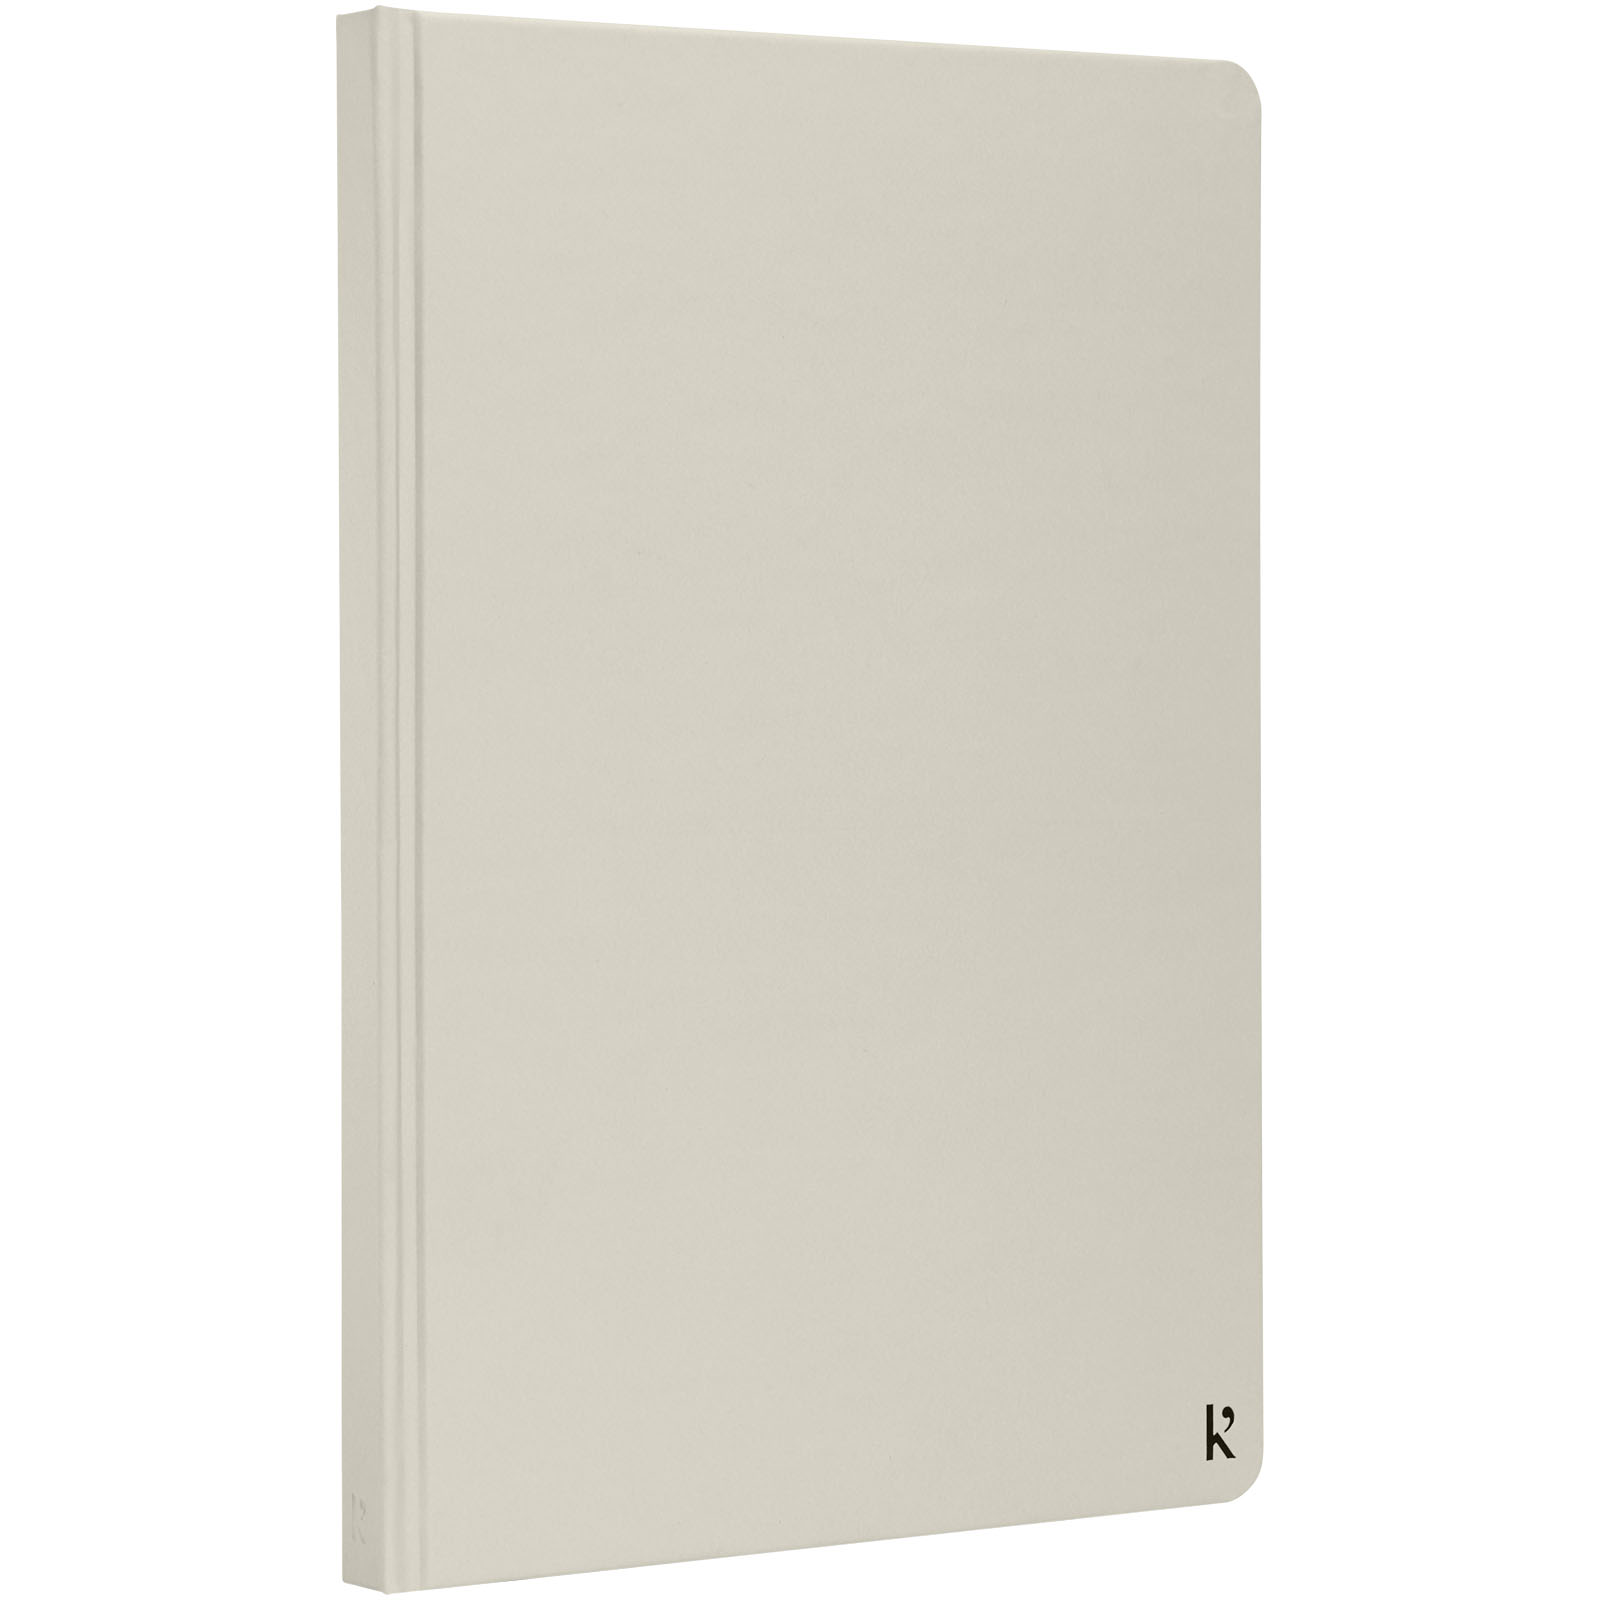 Notebooks & Desk Essentials - Karst® A5 stone paper hardcover notebook - lined